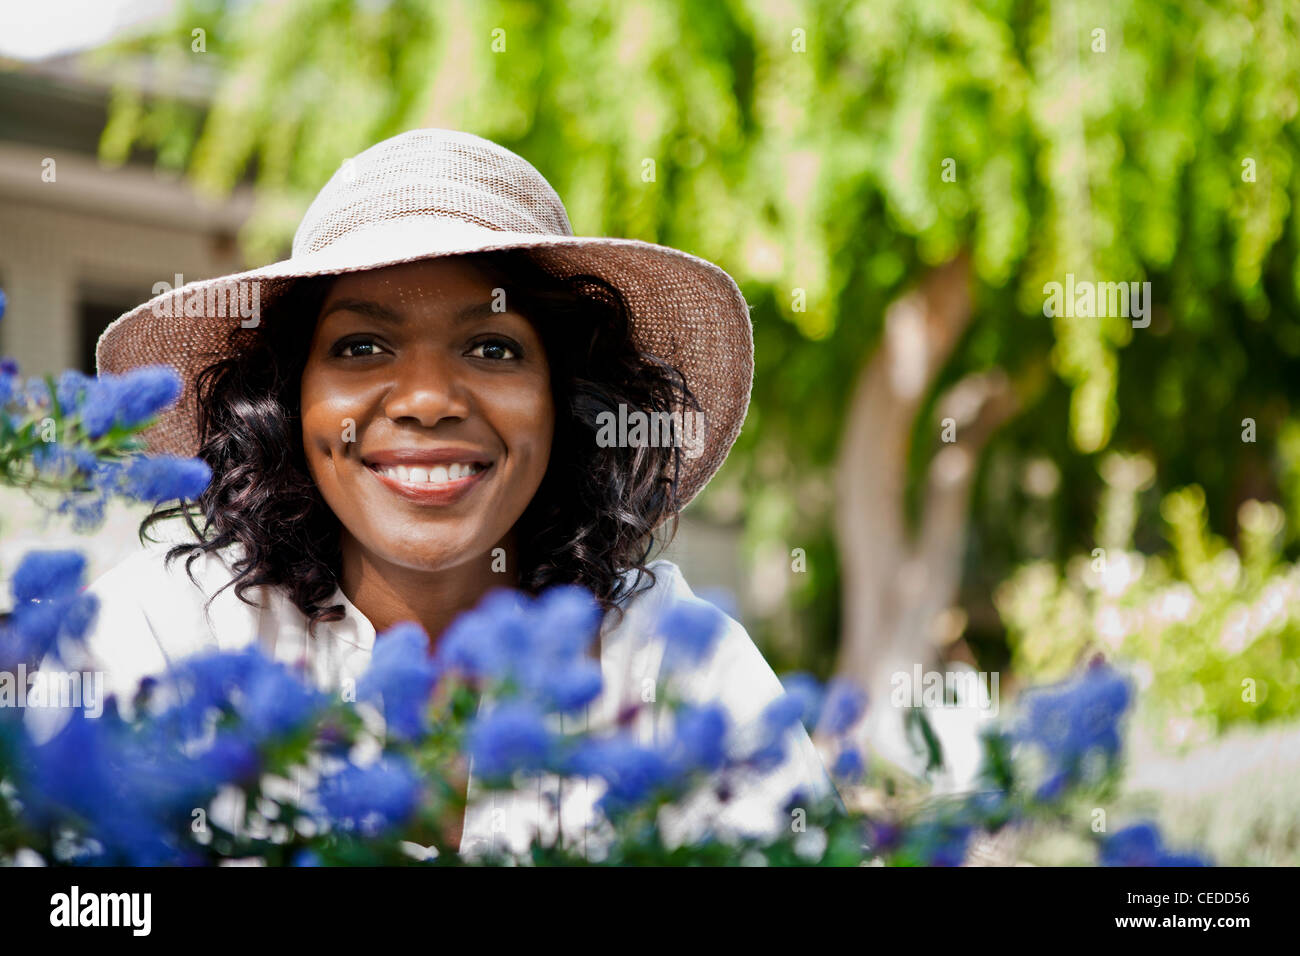 Smiling woman in garden Stock Photo